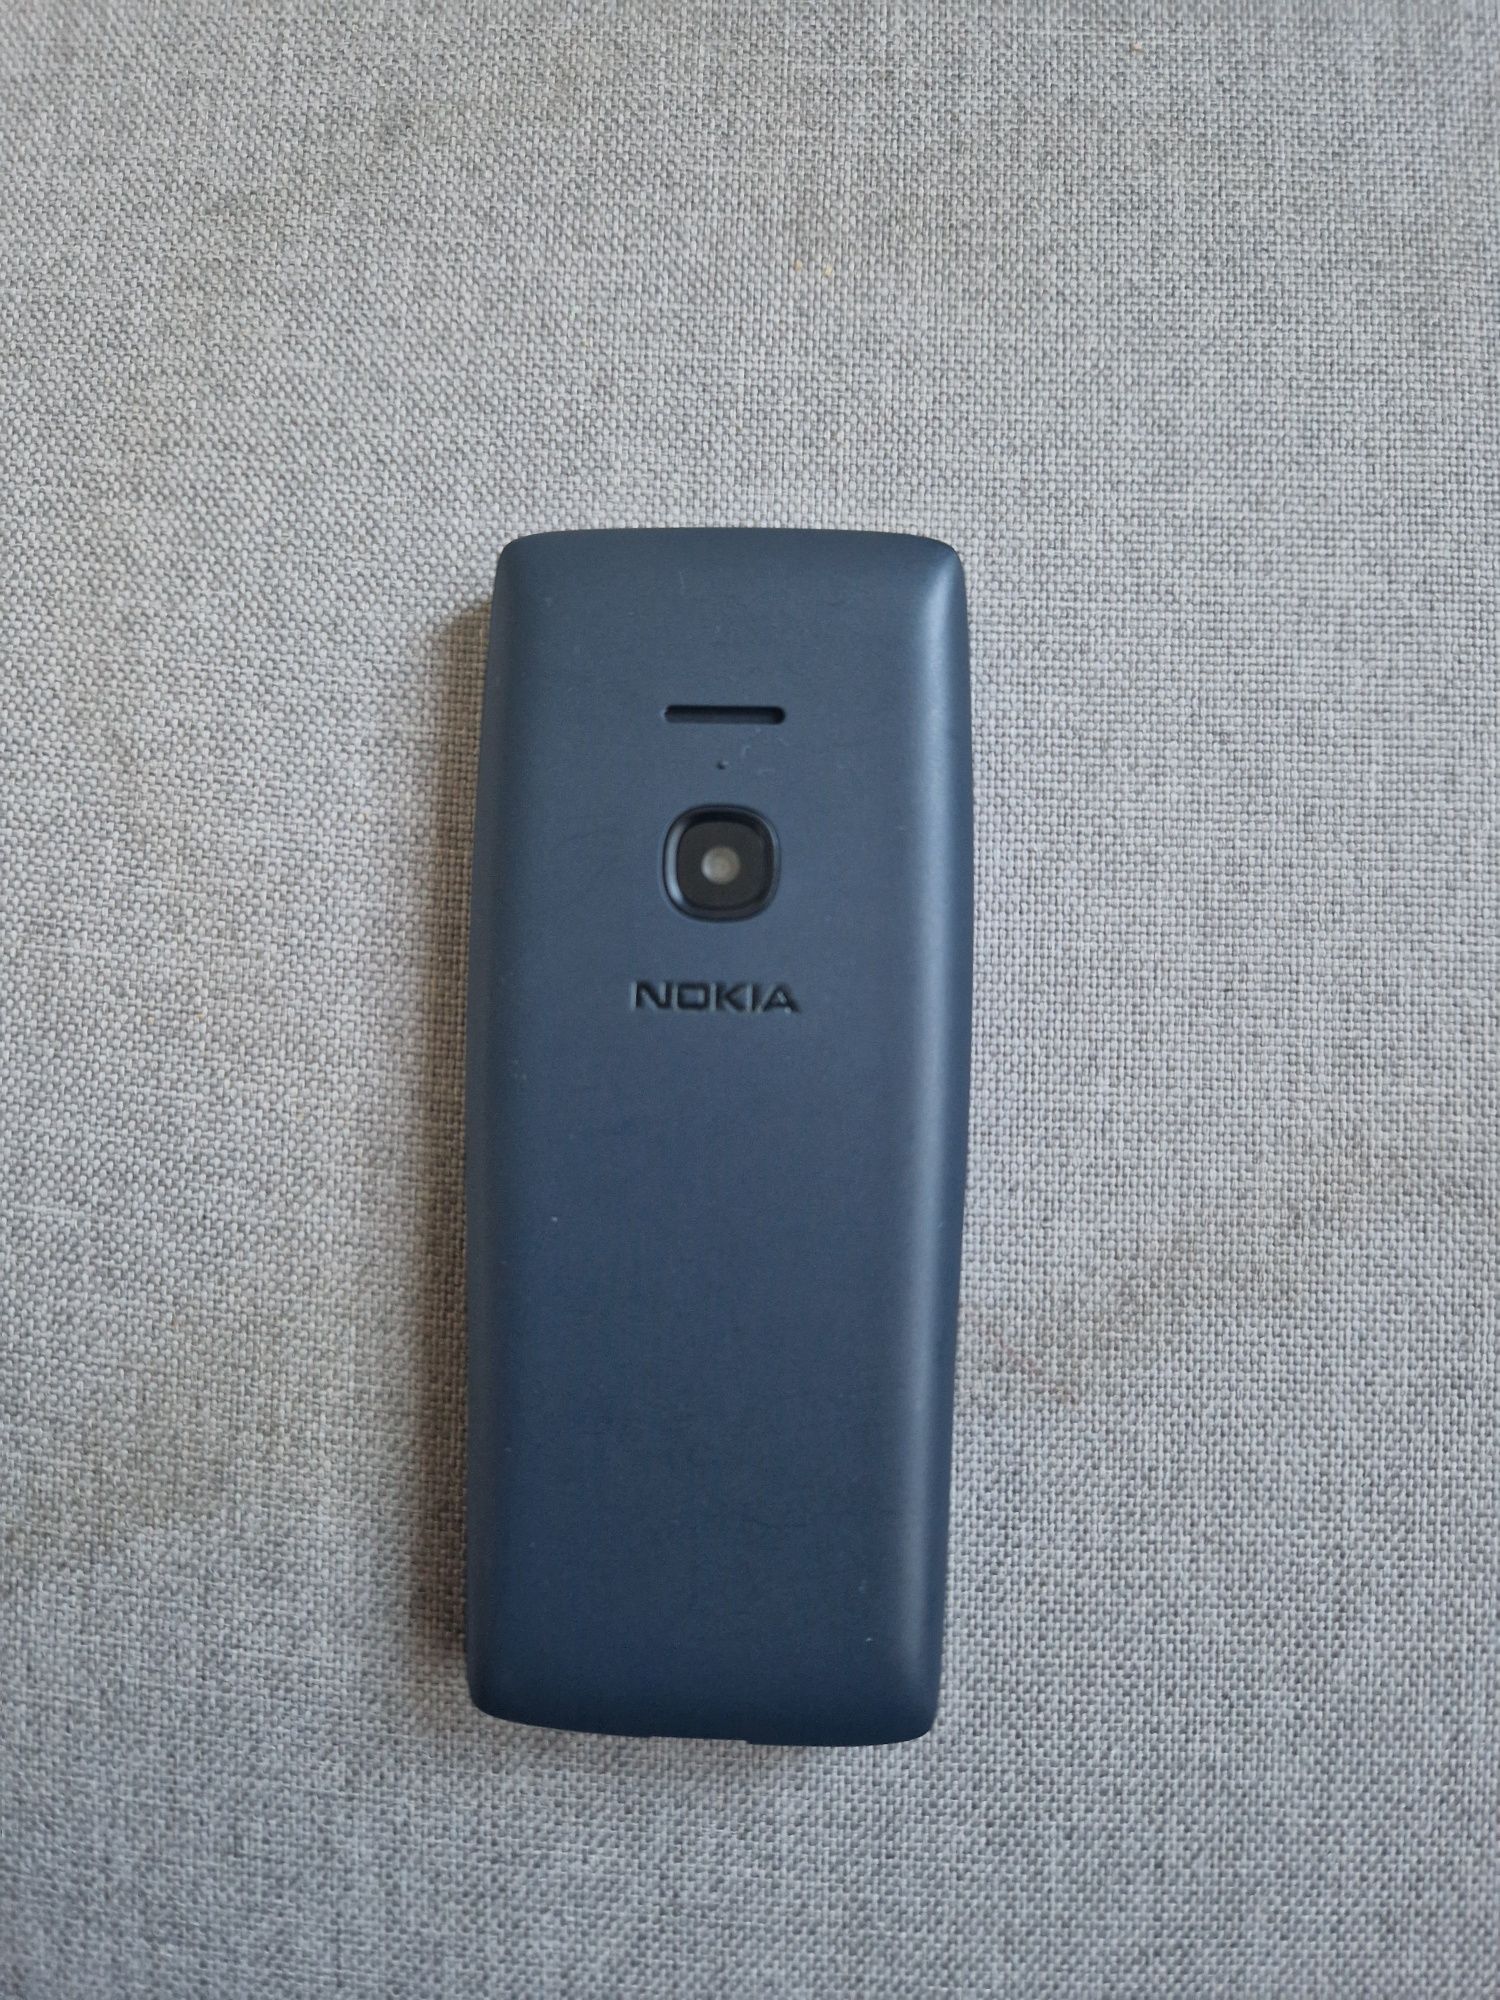 Nokia 8210 4G с бг меню